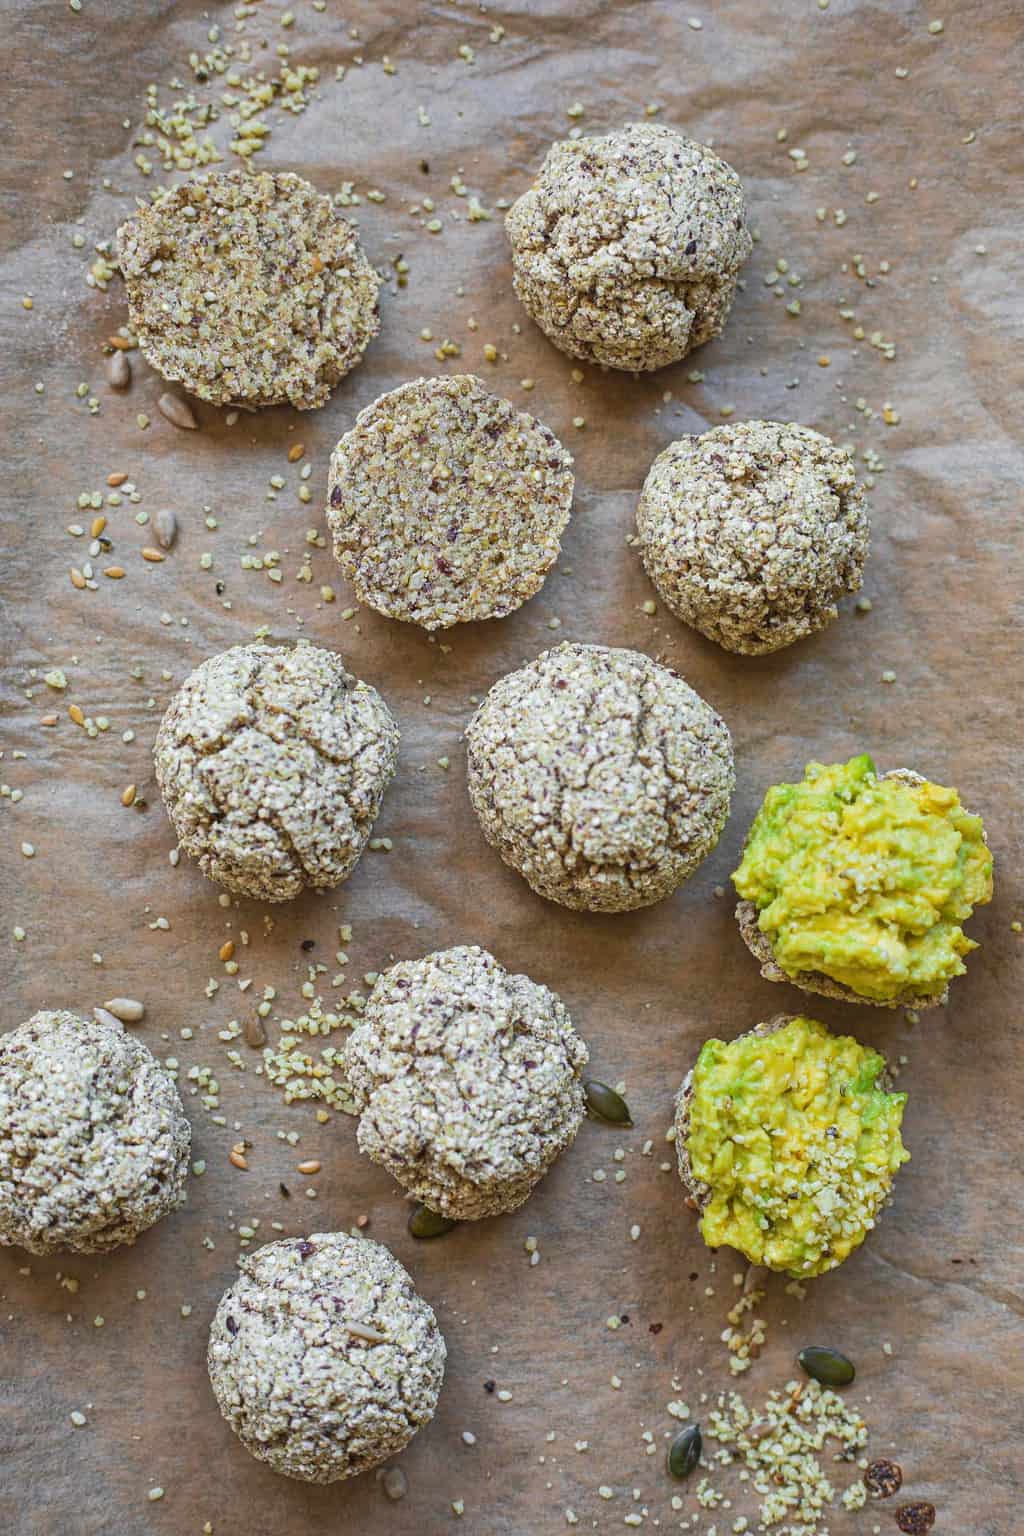 gluten-free vegan quinoa bread rolls